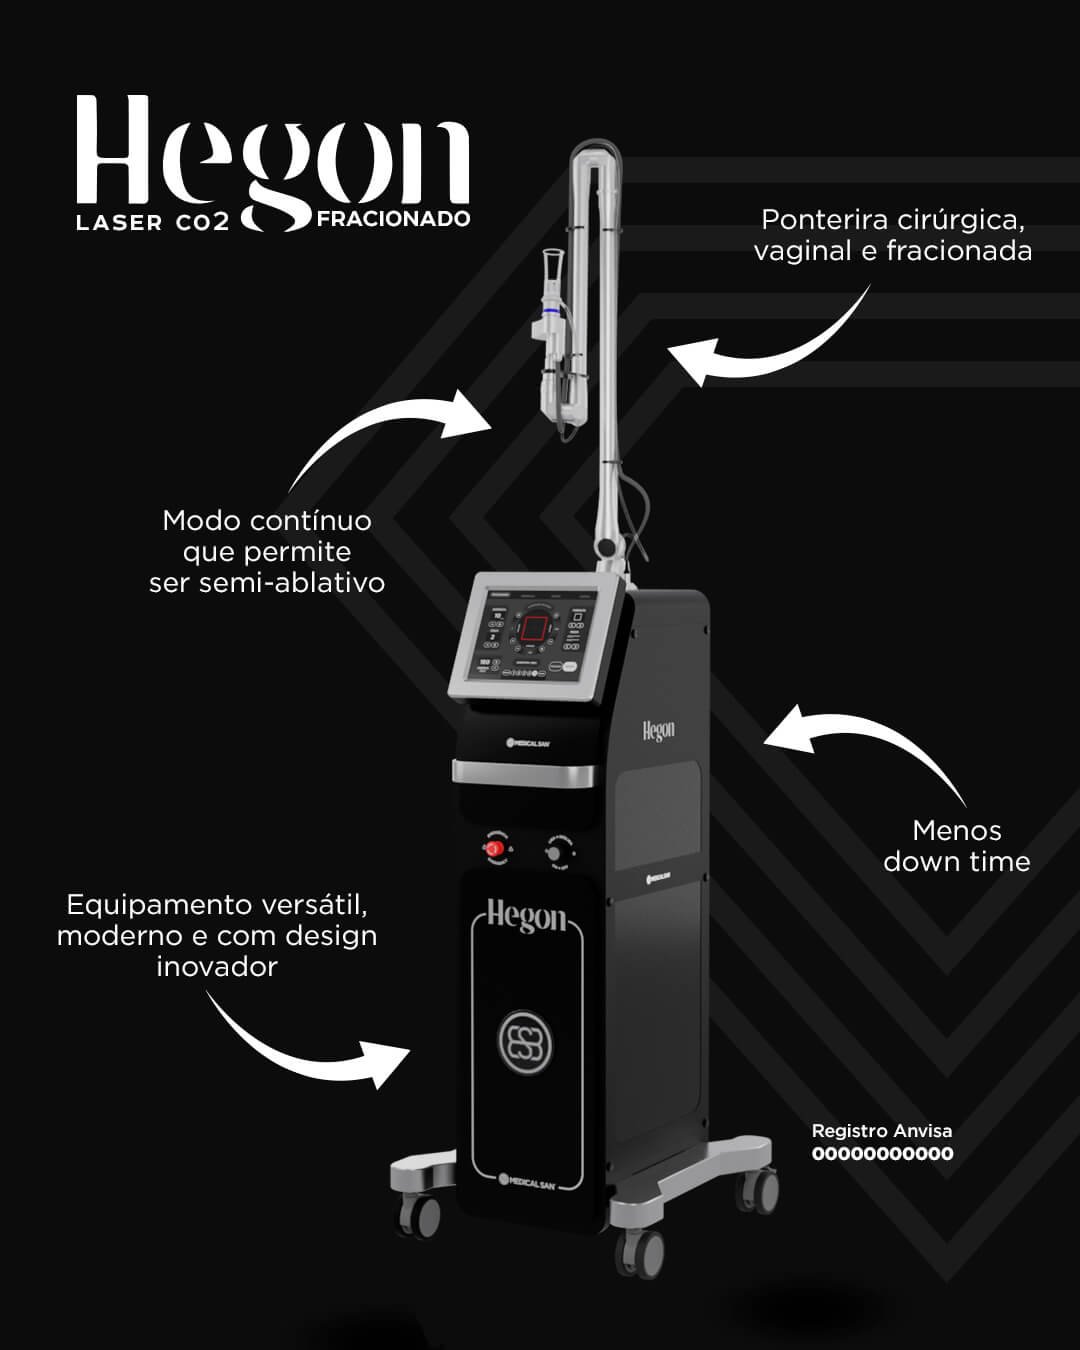 Hegon – Laser de CO2 Fracionado – Medical San